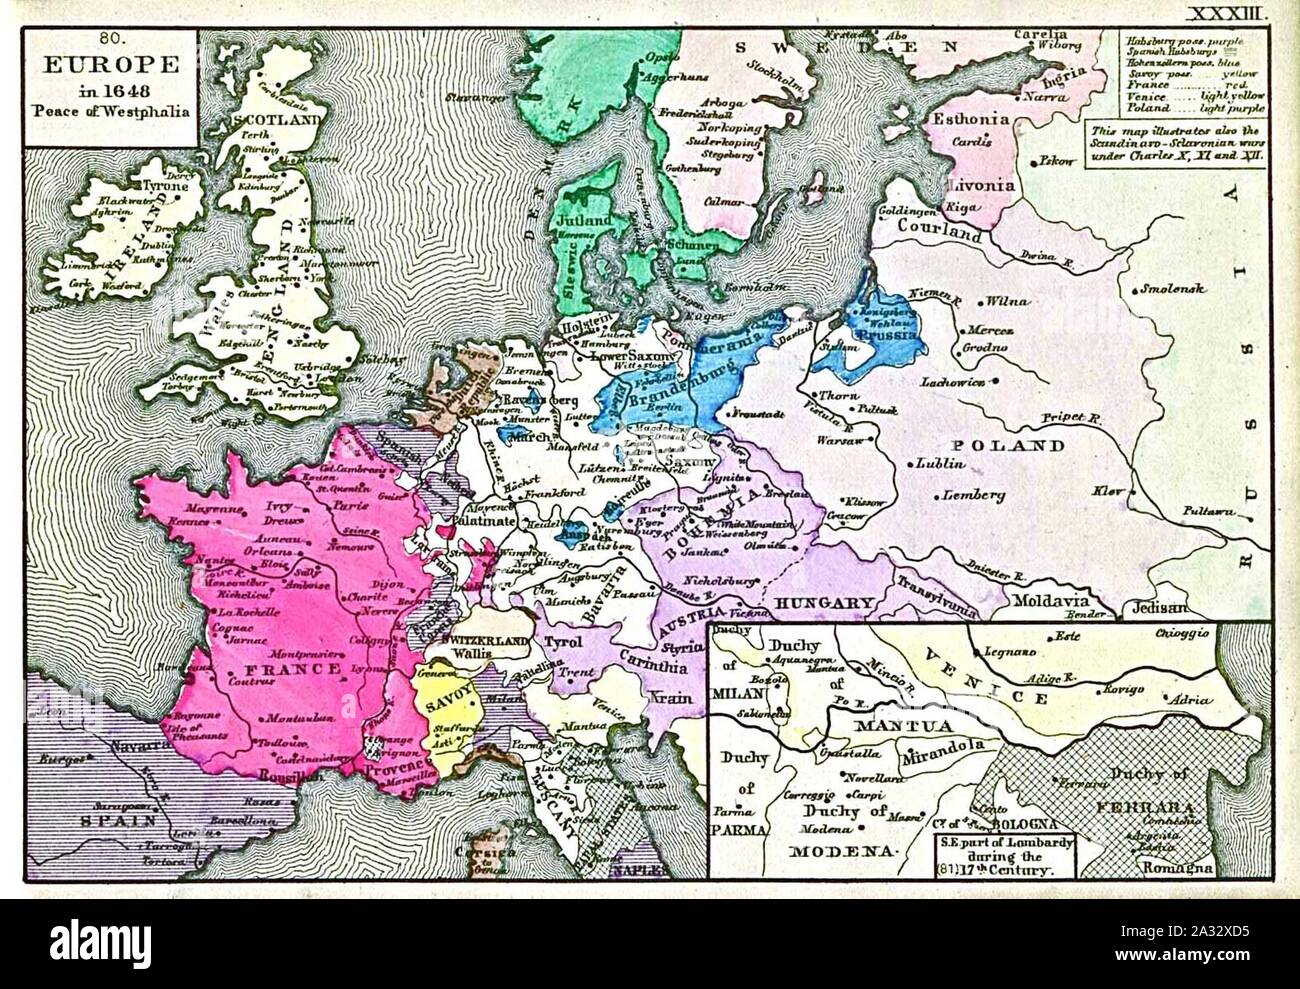 Europe in 1648 (Peace of Westphalia). Stock Photo